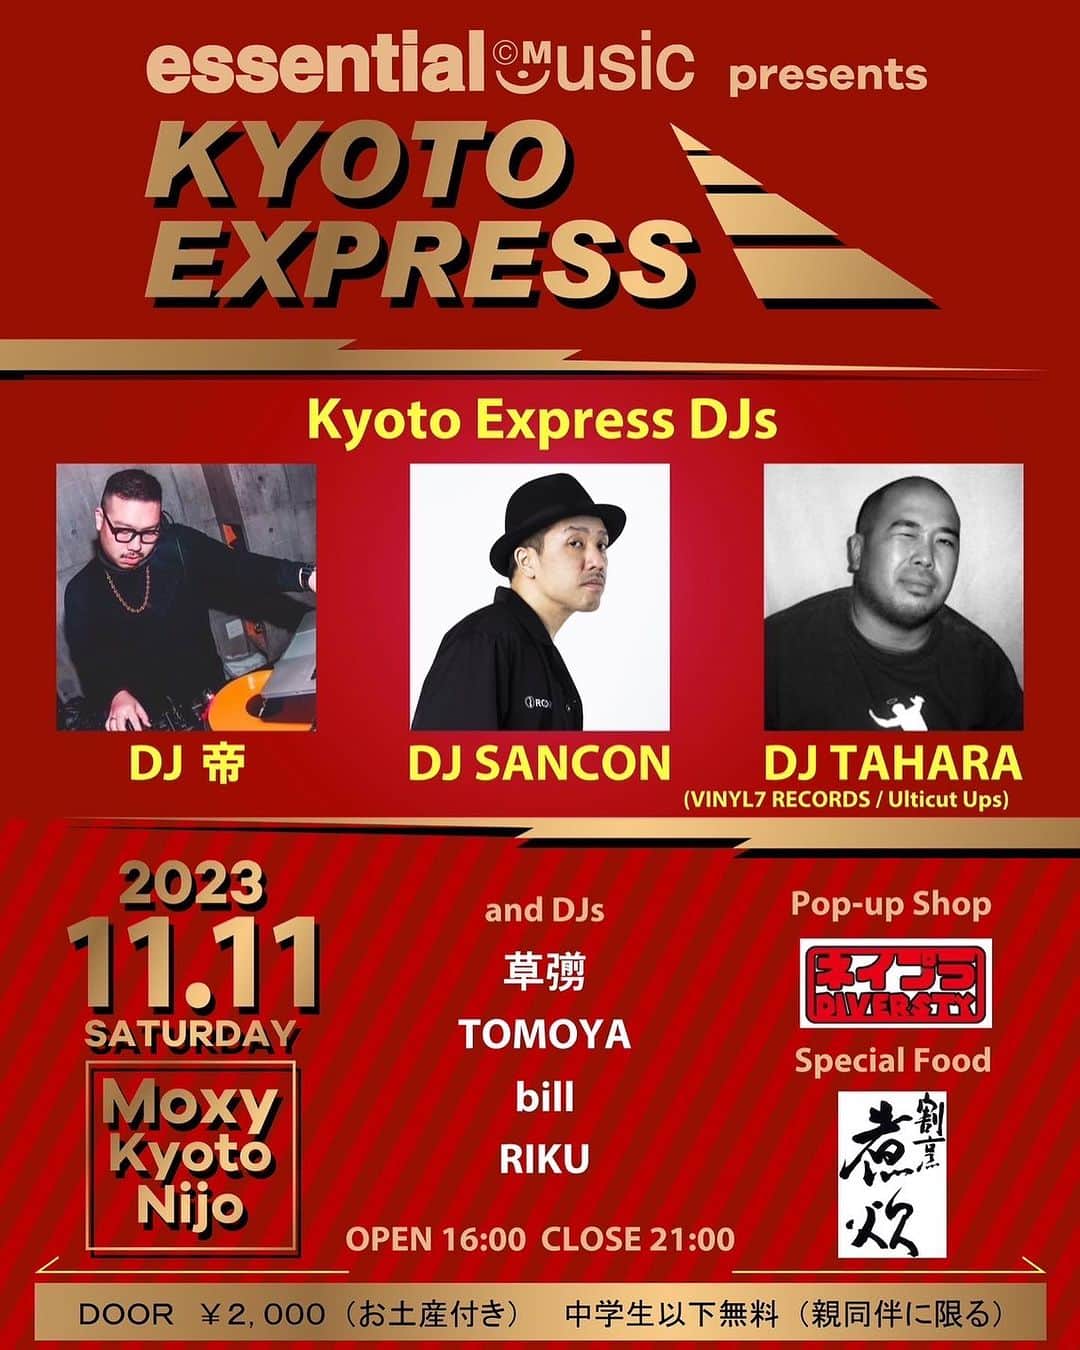 DJ SANCONのインスタグラム：「いよいよ今週土曜日です😎☝️  11.11 (土) ESSENTIAL MUSIC presents Kyoto Express At Moxy Kyoto Nijo Hotel  16時-21時  Kyoto Express DJs 帝 (From 横浜)  SANCON  TAHARA ( VINYL7 RECORDS / Ulticut Ups)   and DJs 草彅 TOMOYA bill RIKU  Pop-up shop ネイプラ  Special Food 割烹 煮炊   DOOR ¥2000 (お土産付き) 中学生以下無料（親同伴に限る）　　  #essentialkyoto #エッセンシャル京都 #kyotoparty #kyotonightlife  #japanparty #hiphopjapan #kyotohiphop #kyotohiphoppary #MoxyKyotoNijo  #モクシー京都二条」